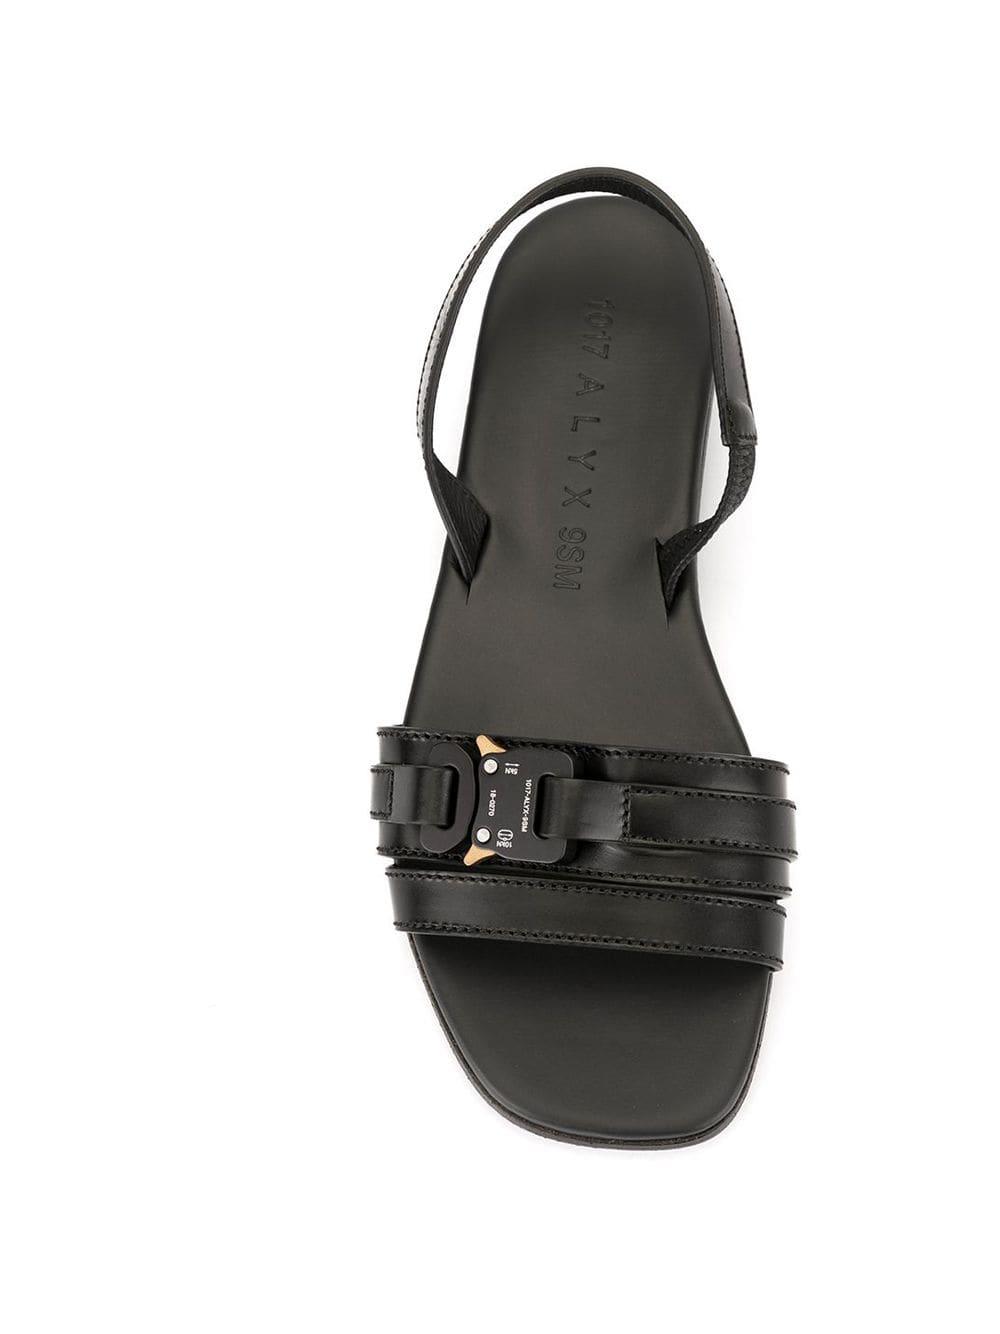 1017 ALYX 9SM Leather Capri Flat Sandals in Black - Lyst